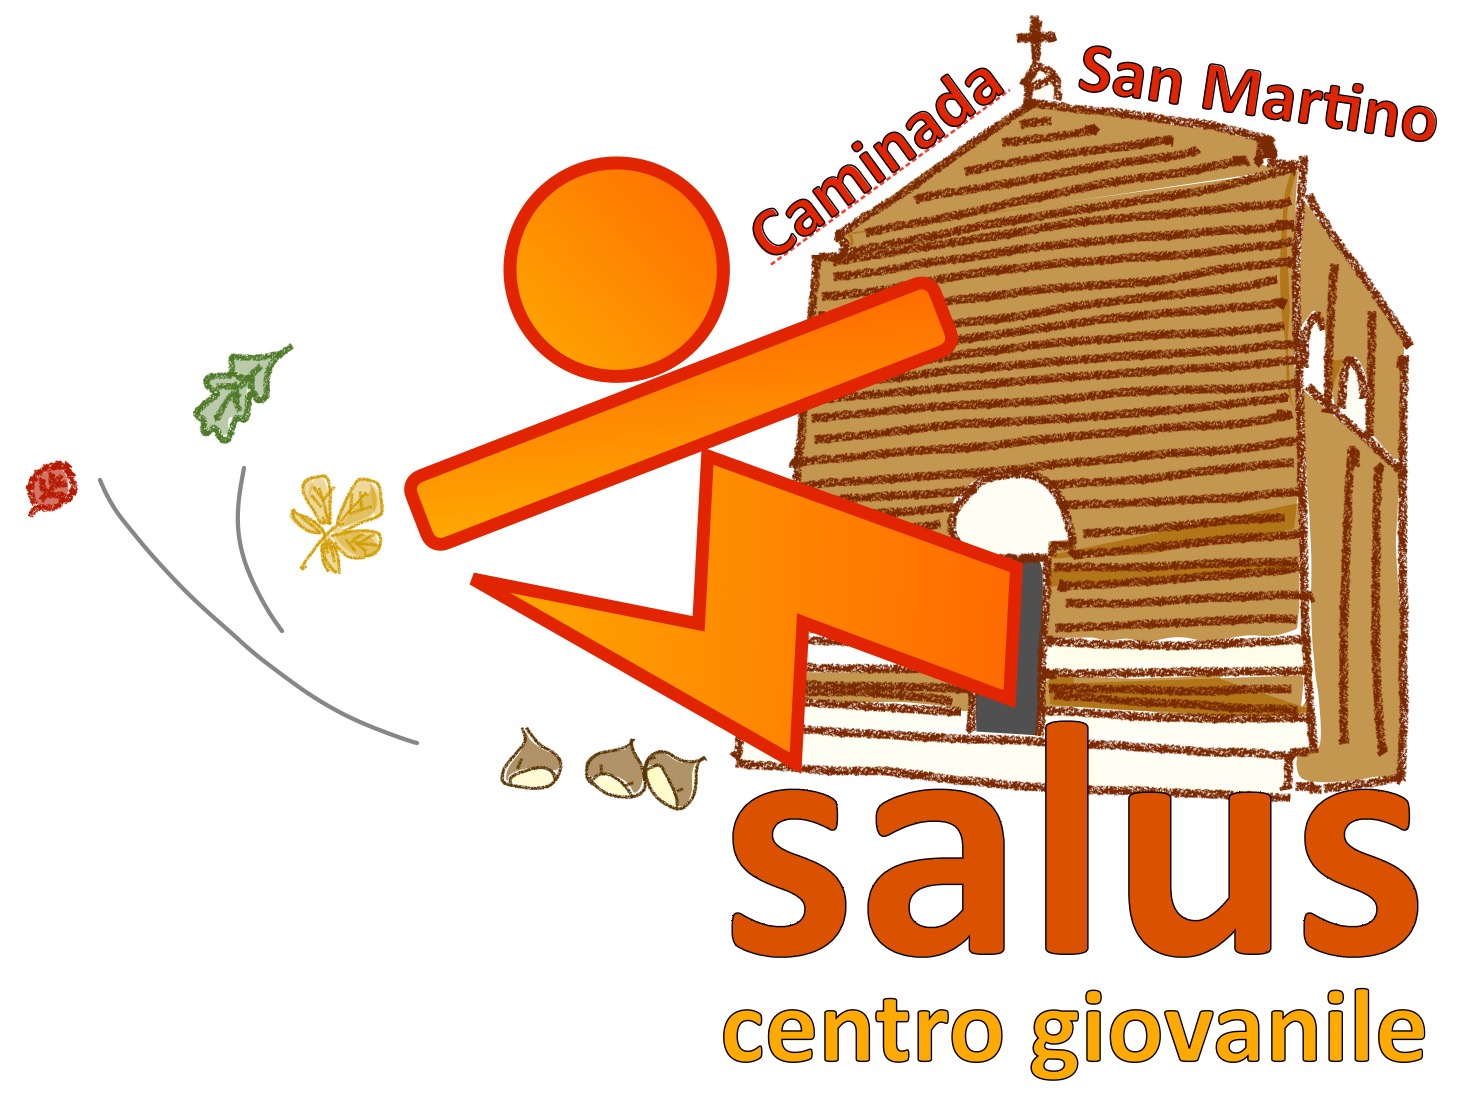 logo GP AVIS Albaredo